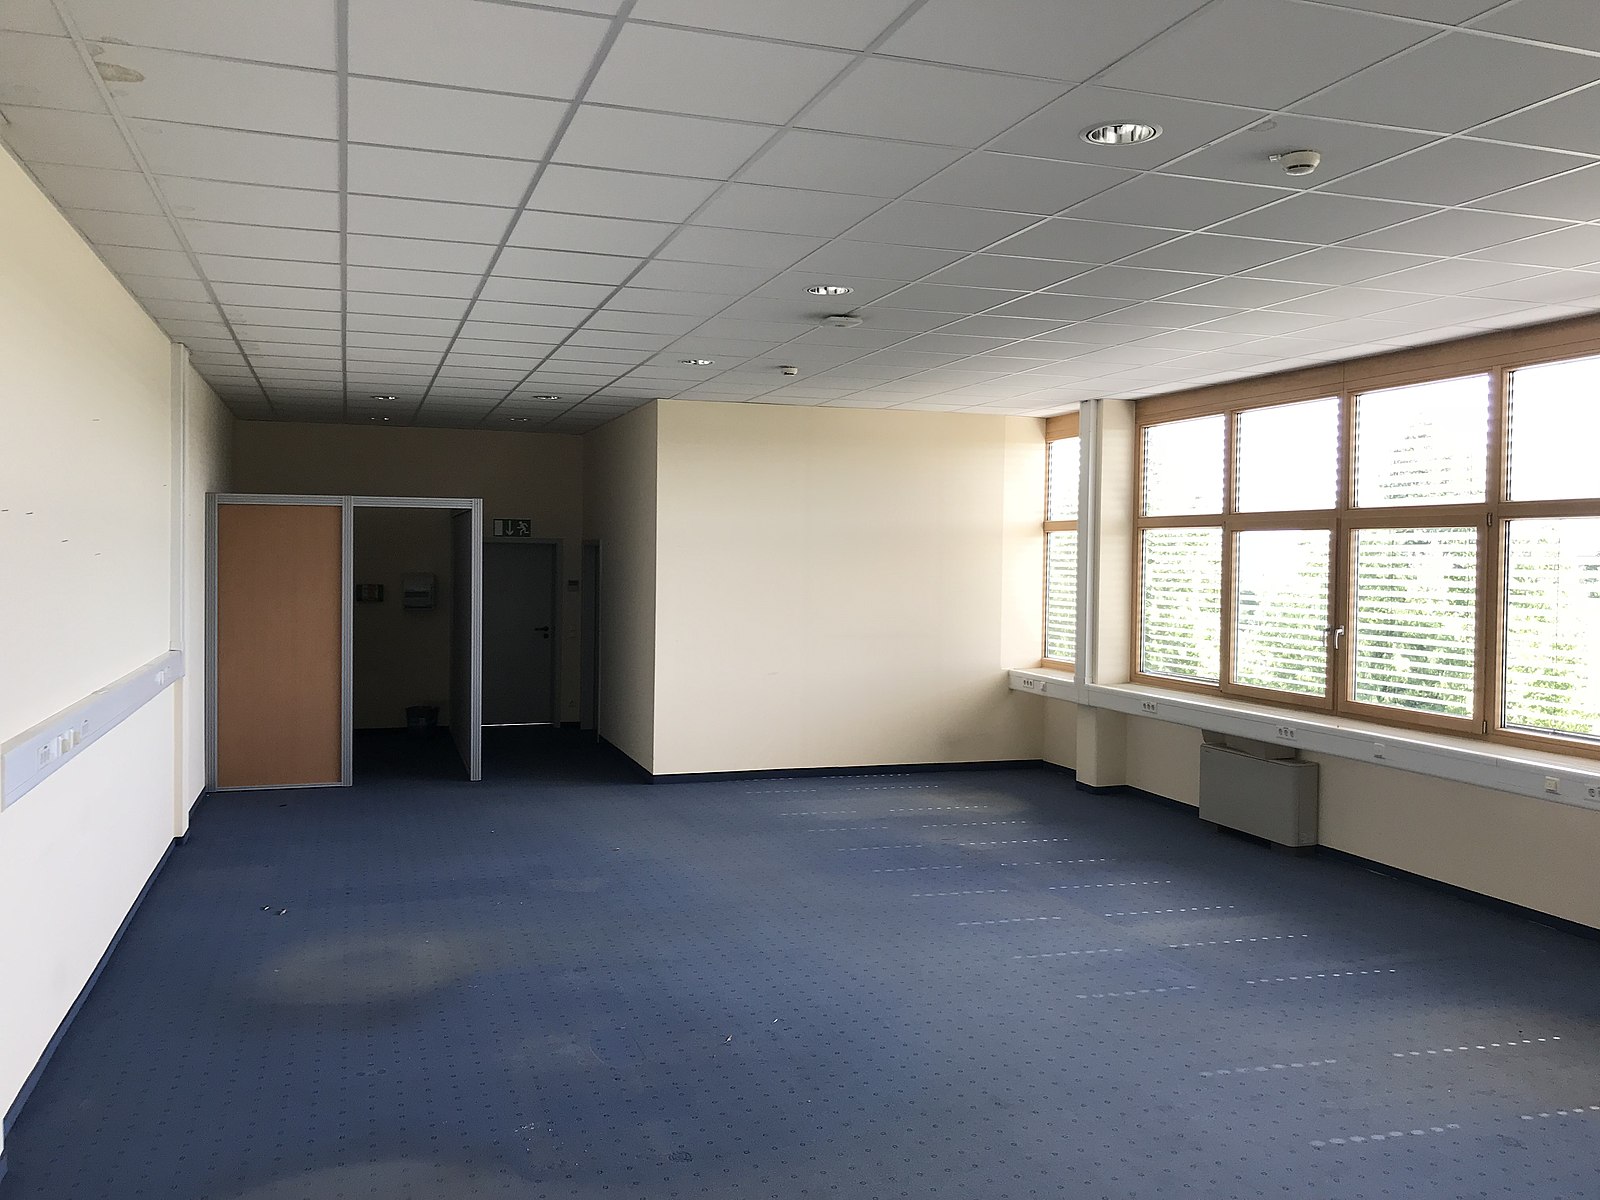 1600px-Empty_room_of_office.jpg